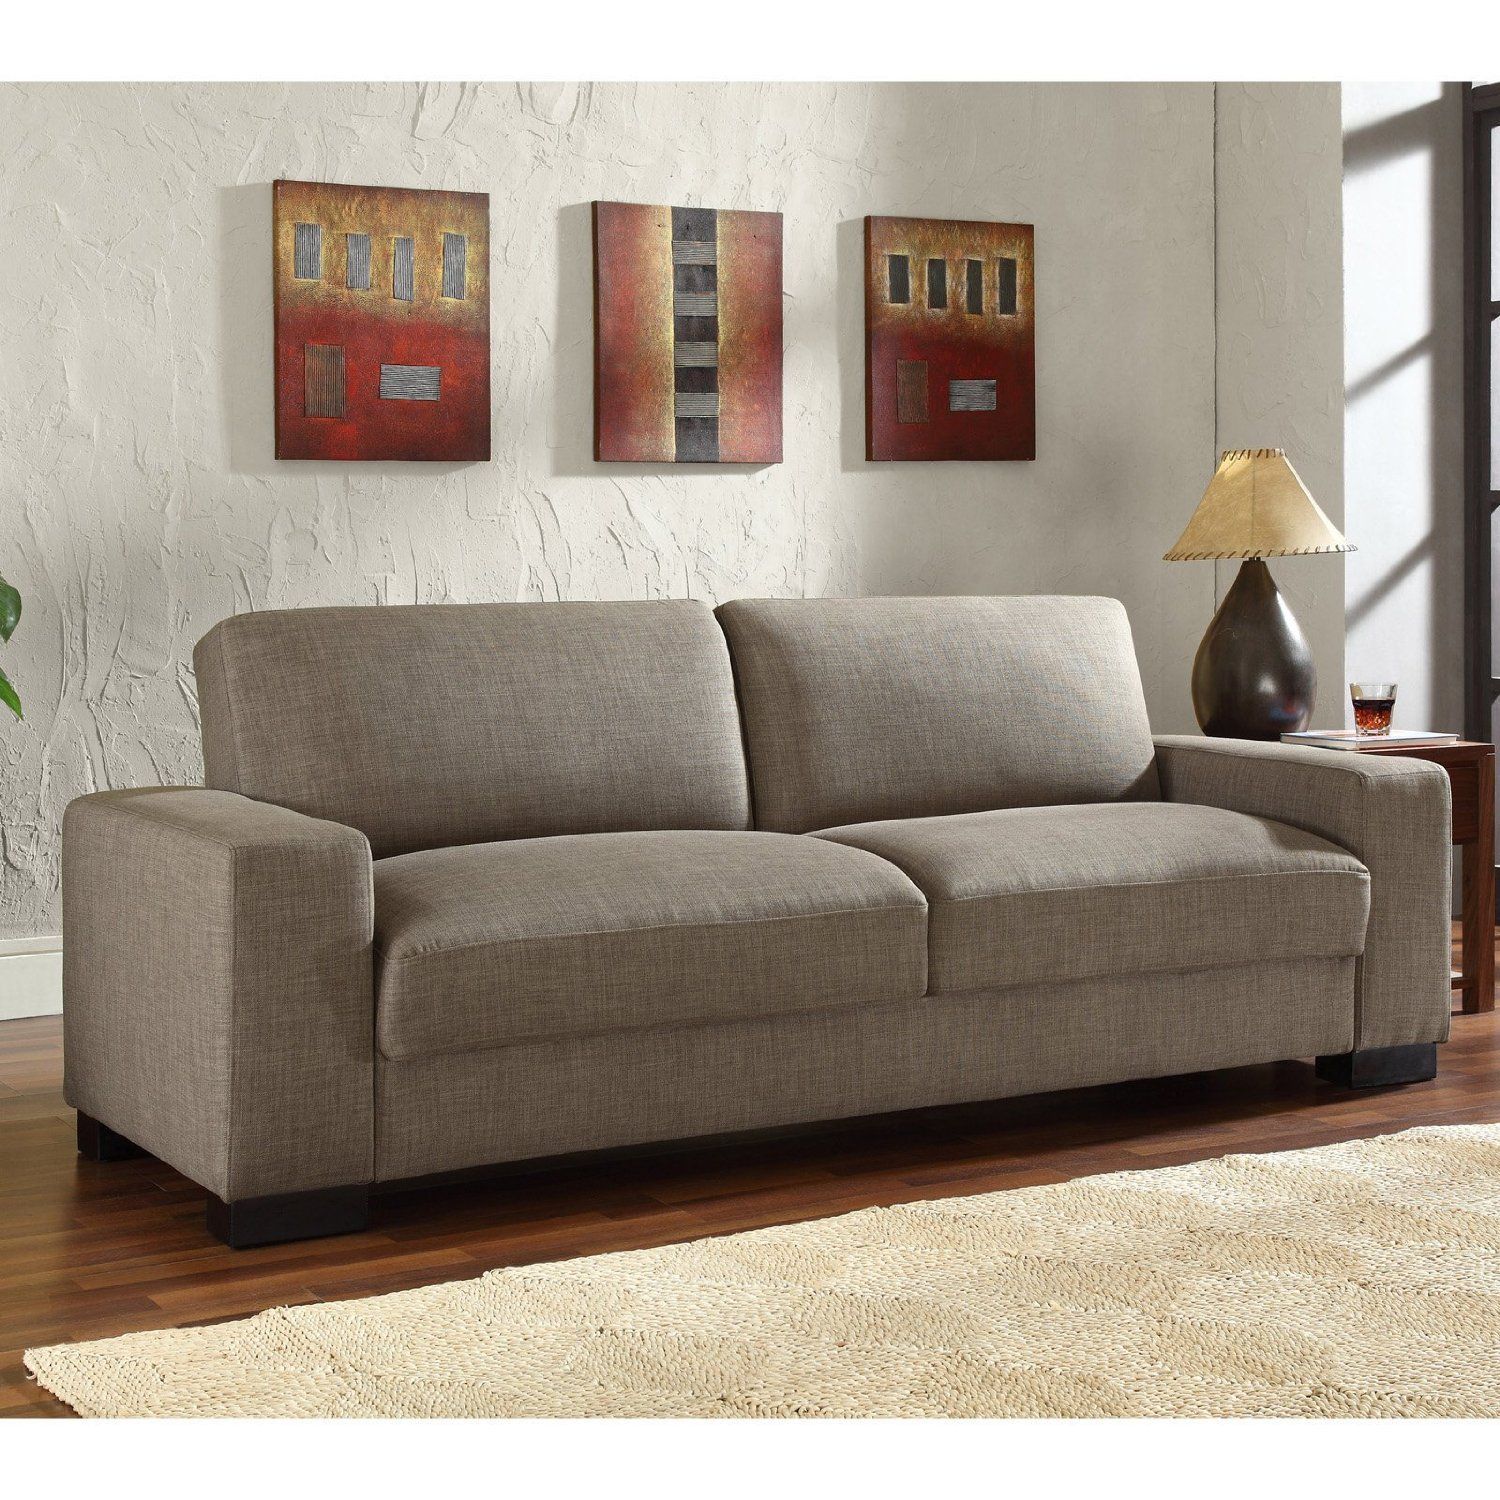 Convertible Sofa: Modern Convertible Sofa In 8 Seat Convertible Sofas (View 20 of 20)